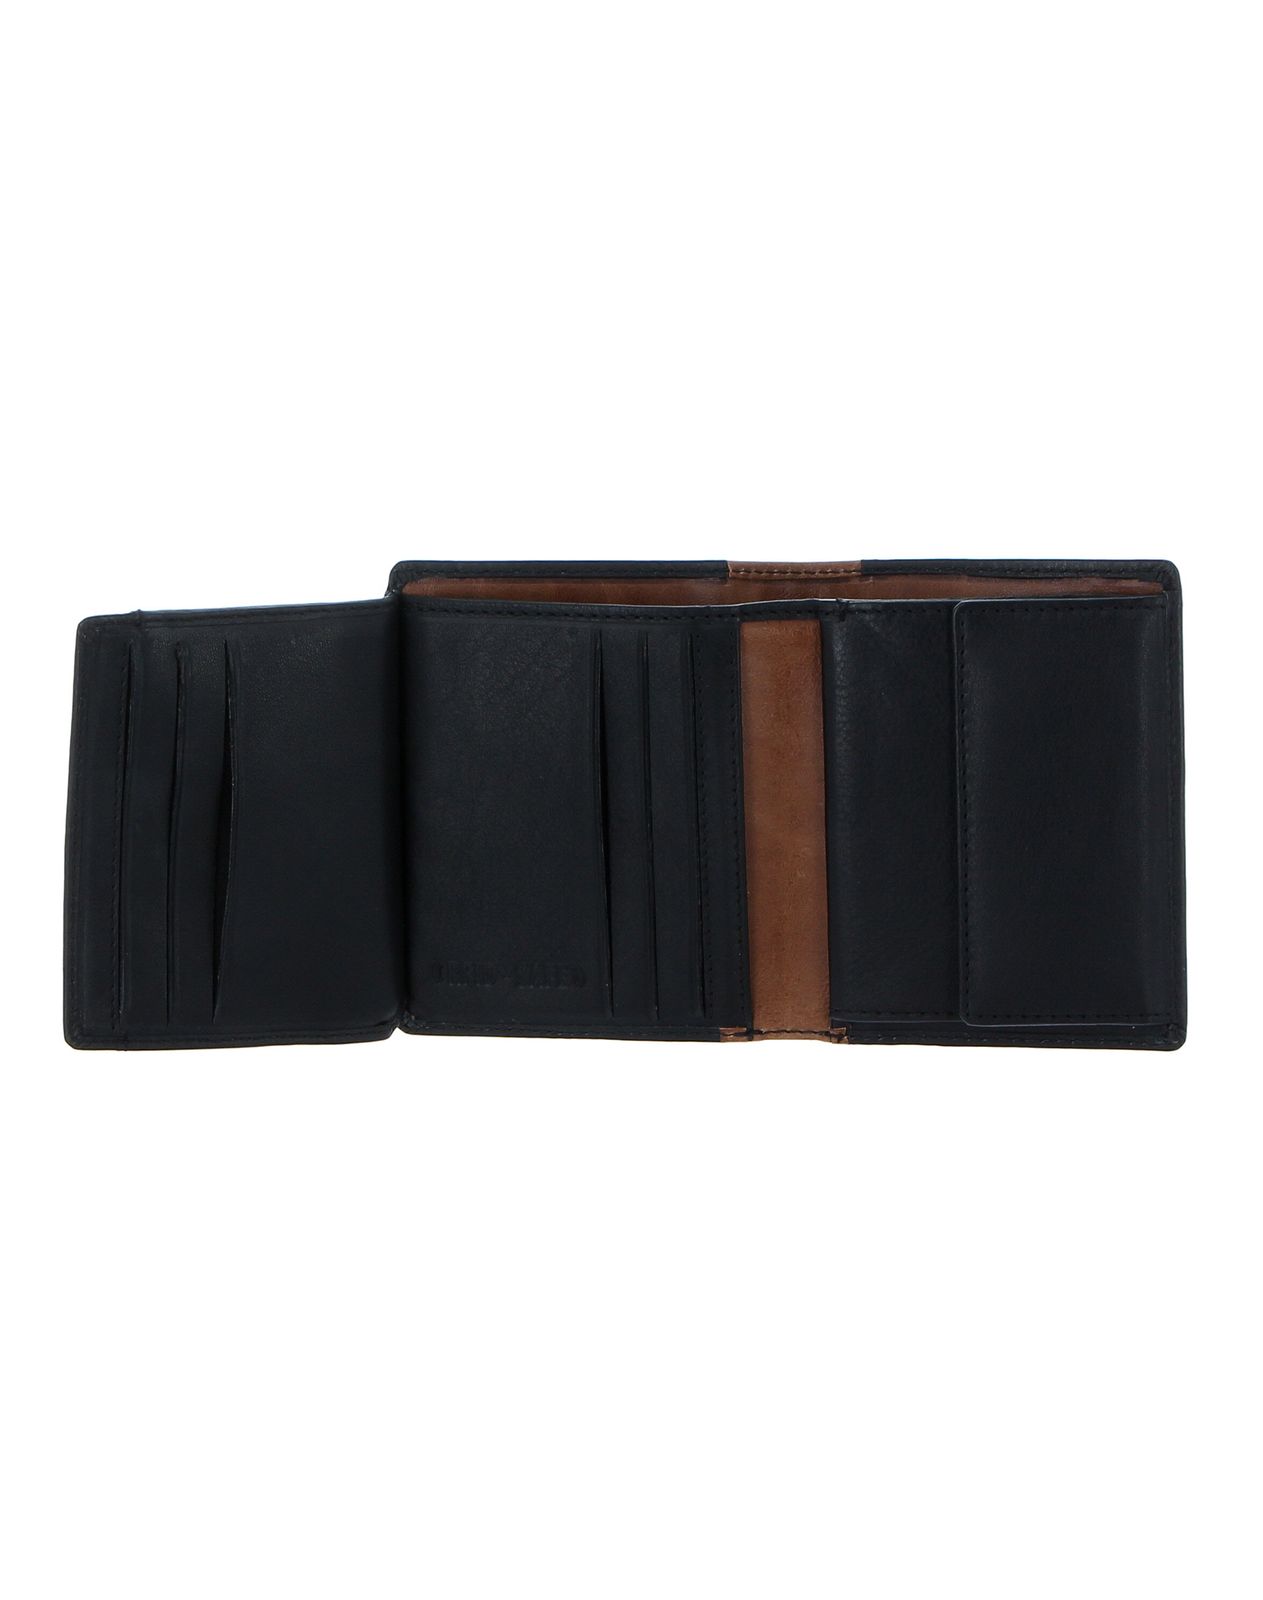 CHIEMSEE Wallet with Flap Black / Cognac | modeherz